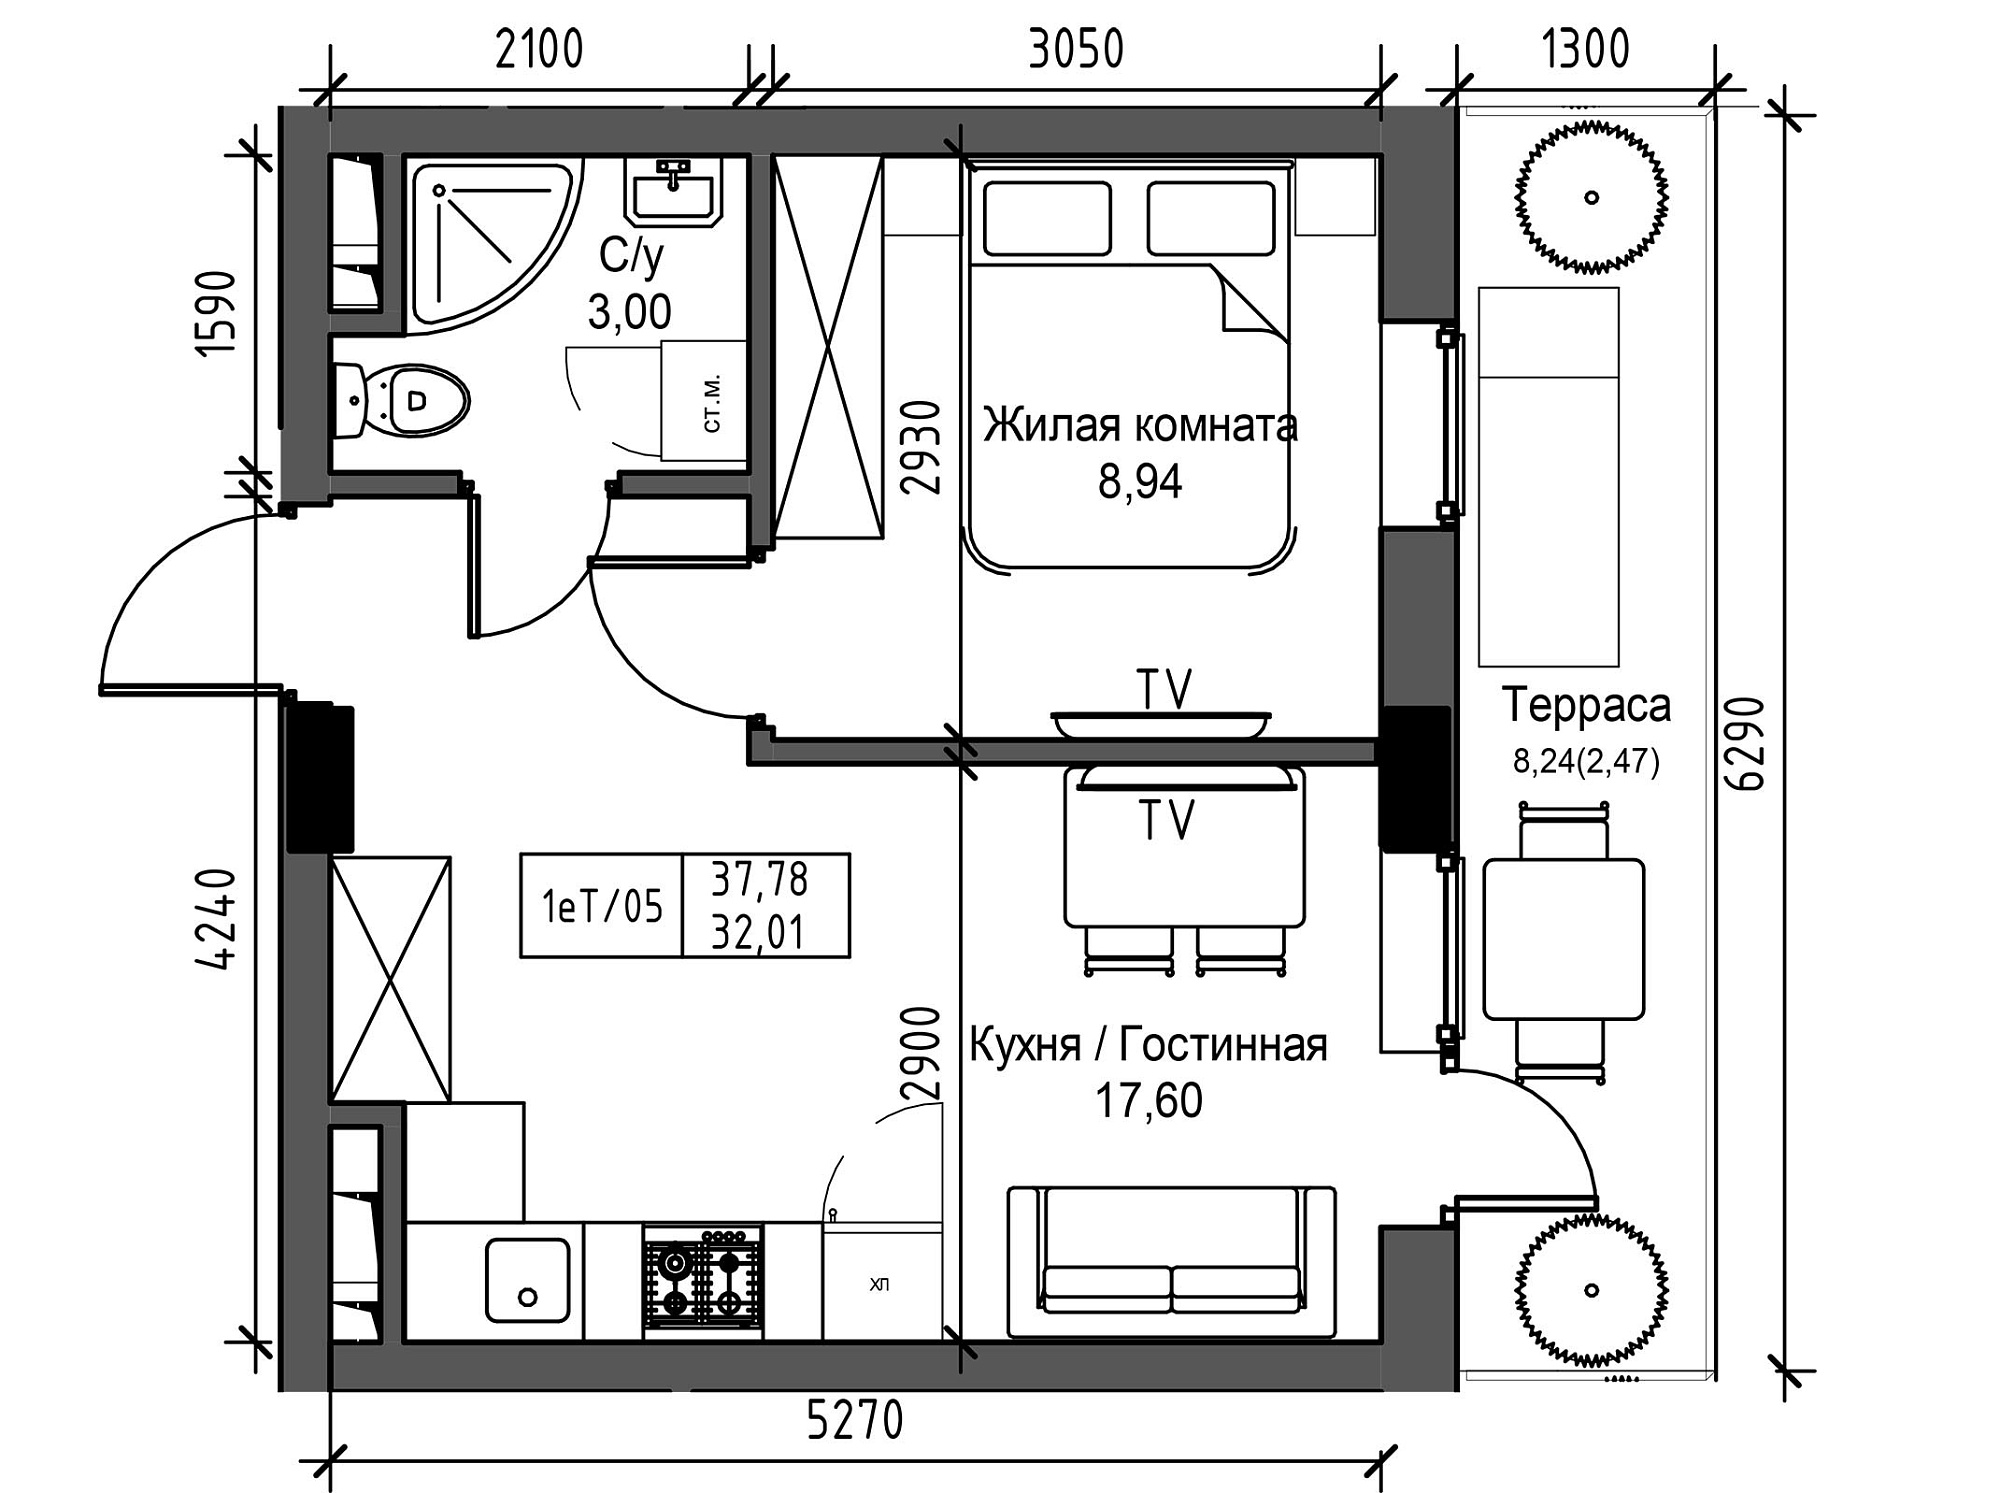 Planning 1-rm flats area 32.01m2, UM-003-11/0115.